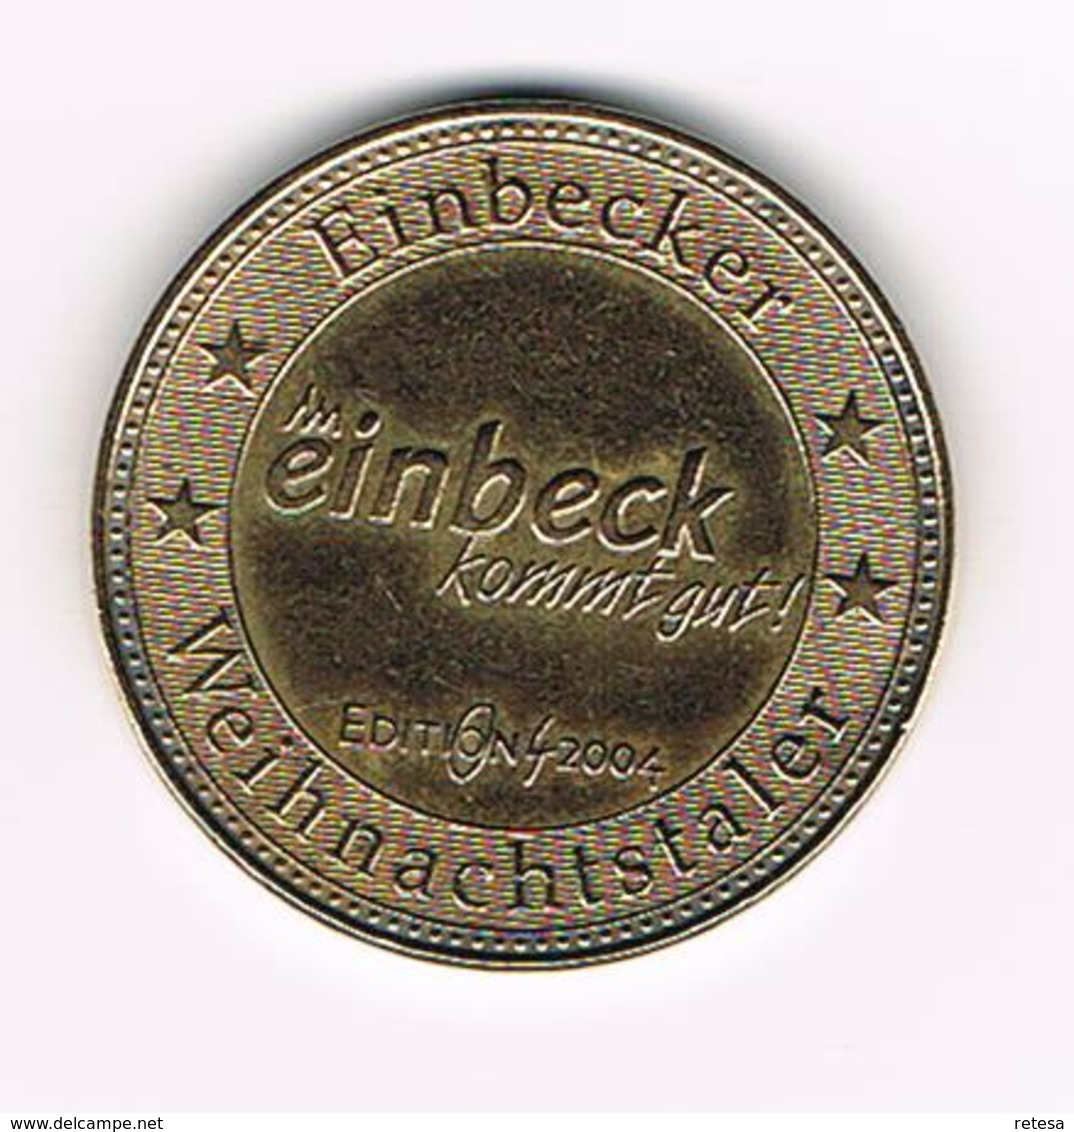 &  PENNING  EINBECKER  WEIHNACHTSTALER  EICKESCHES HAUS 2004 - Souvenirmunten (elongated Coins)